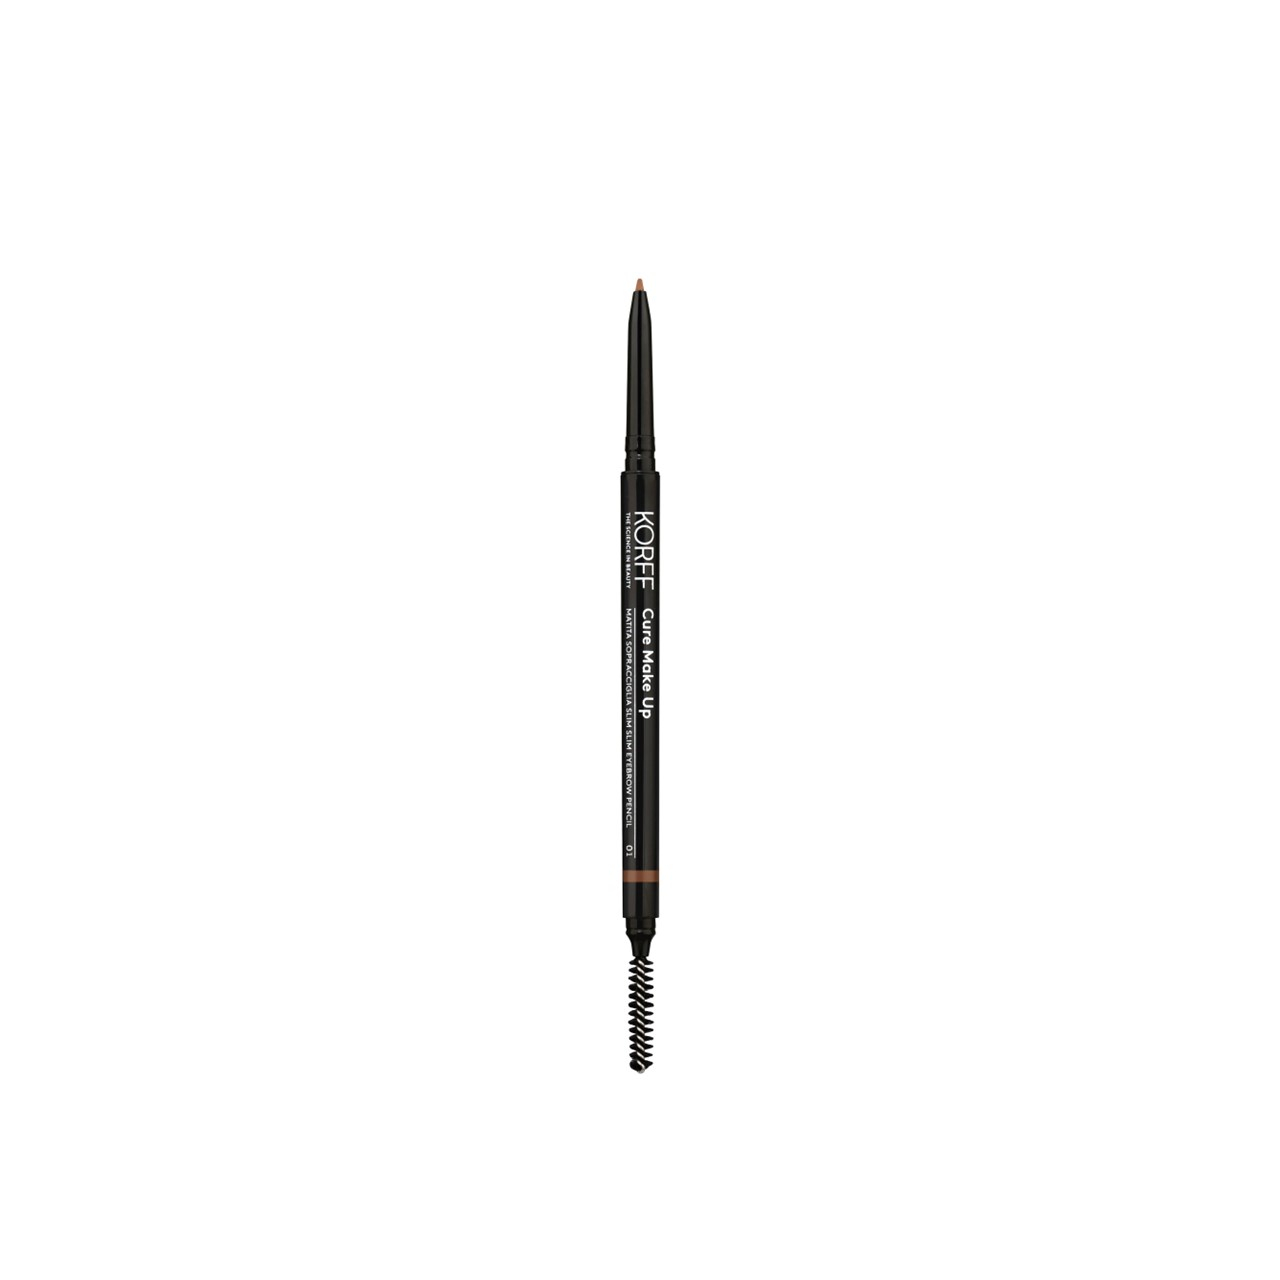 Korff Cure Make-Up Slim Eyebrow Pencil 01 0.09g (0.003 oz)